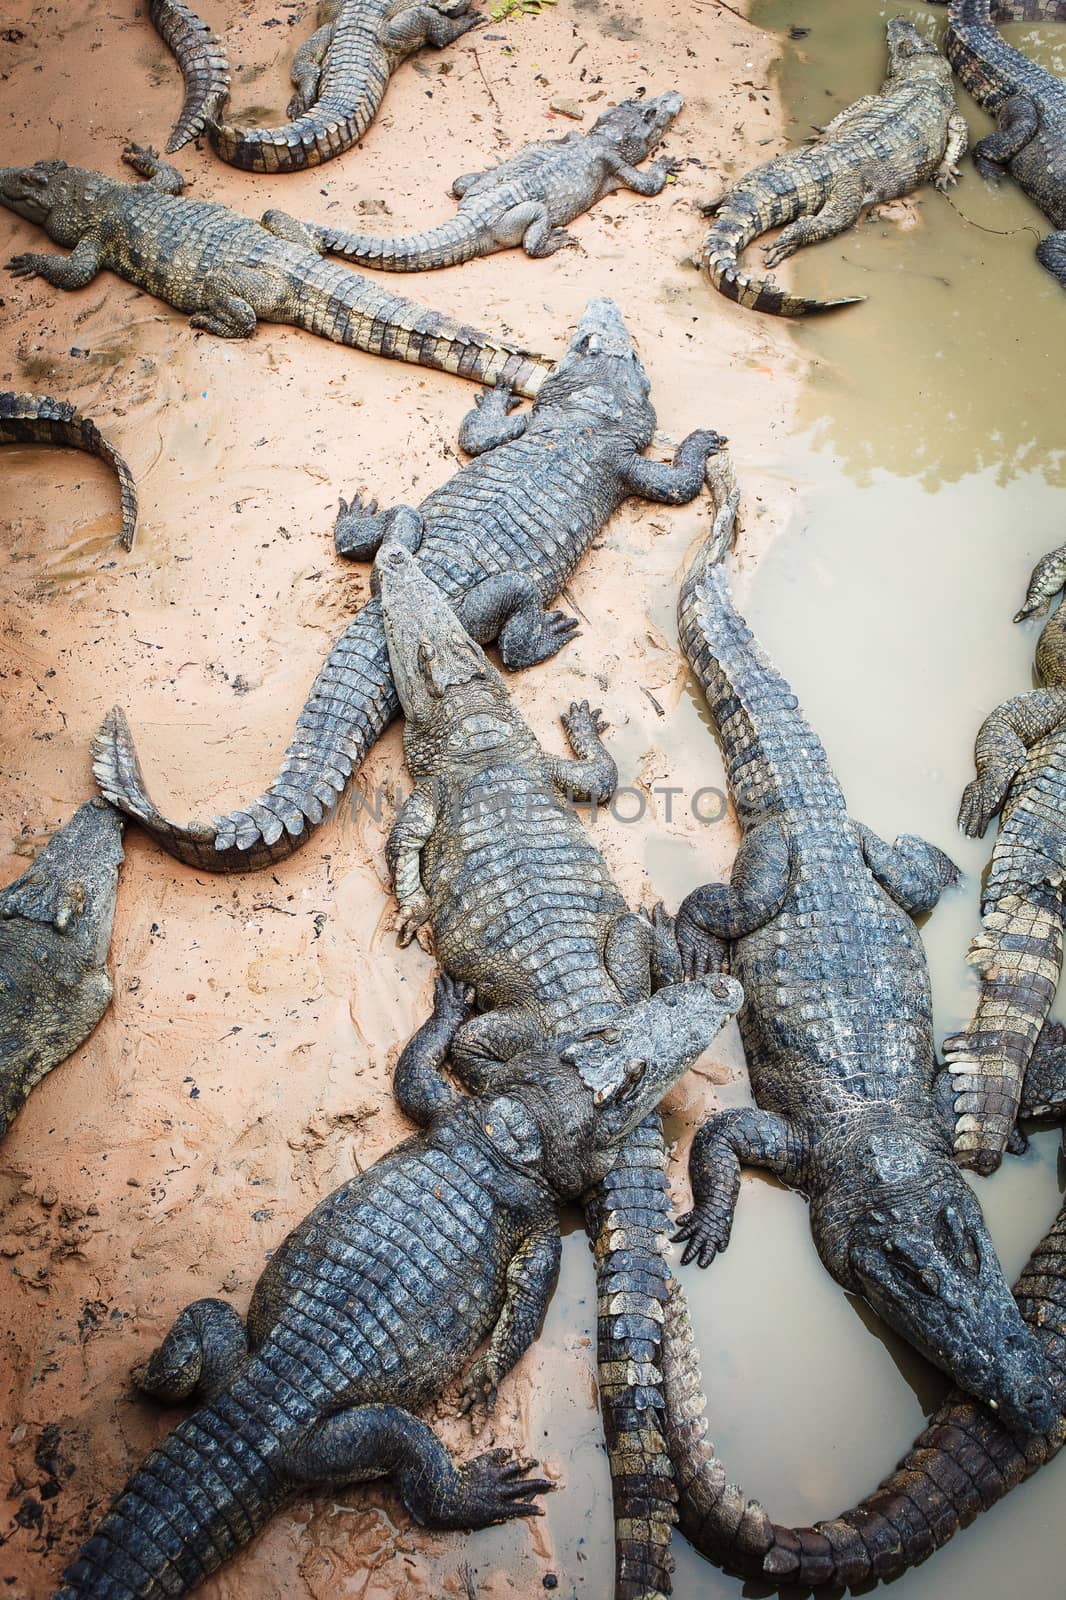 Large crocodiles in Cambodia by gorov108